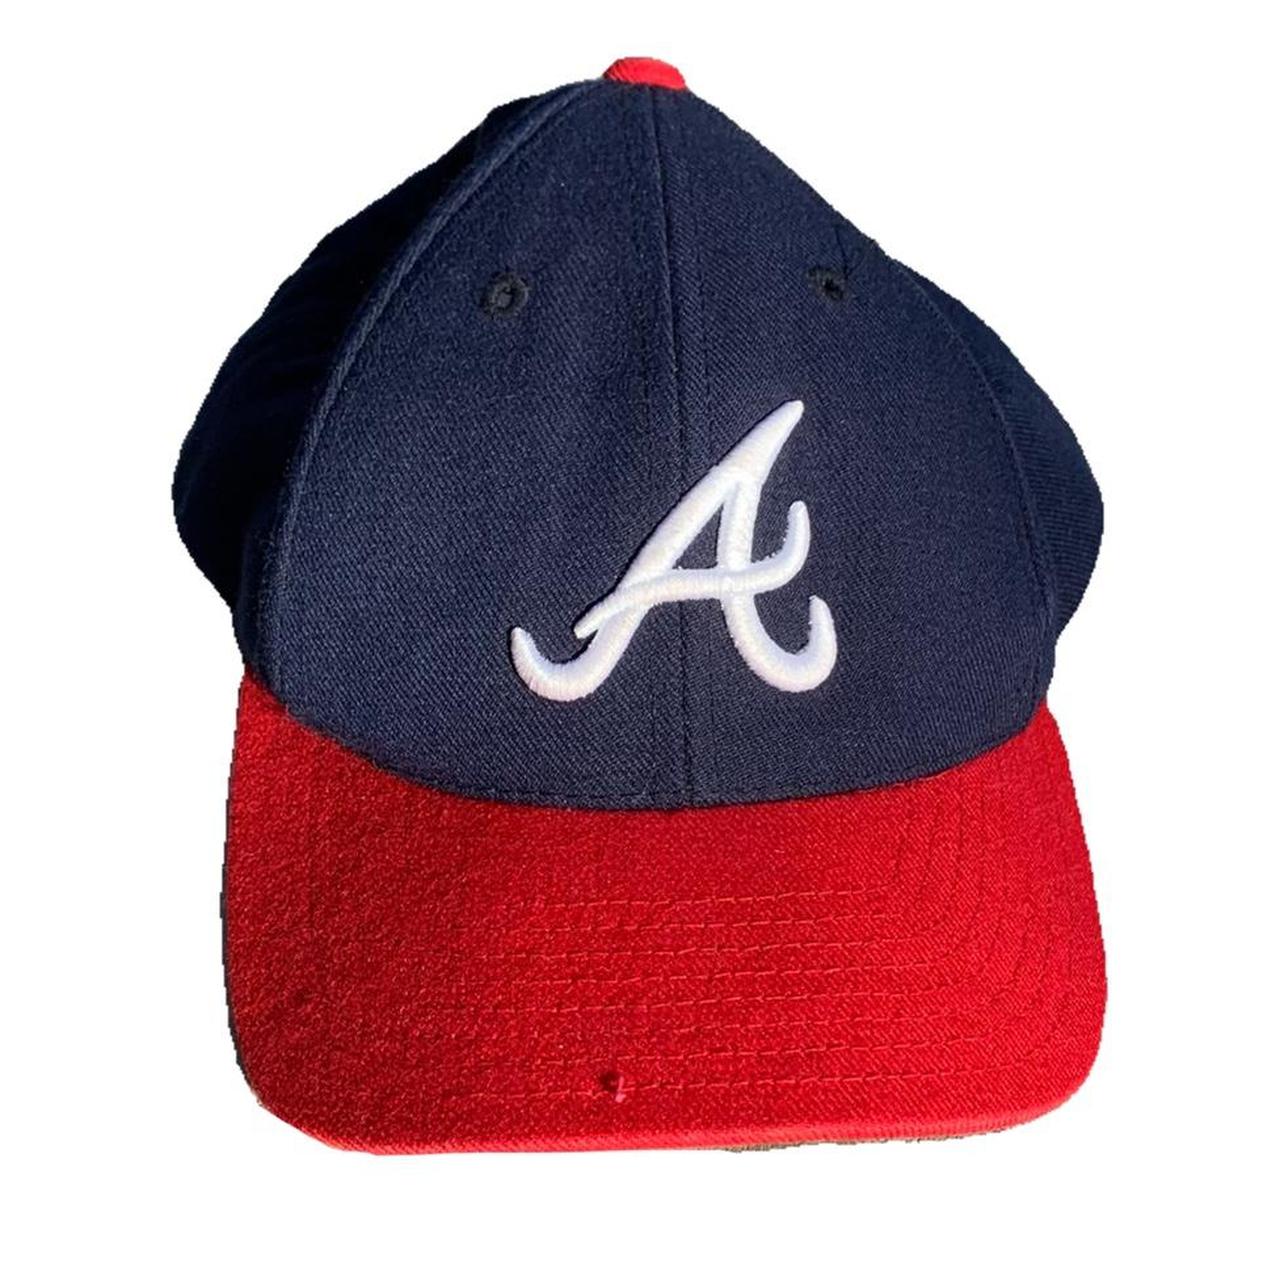 Exclusive! Milwaukee Braves 1957 World Series Hat in - Depop